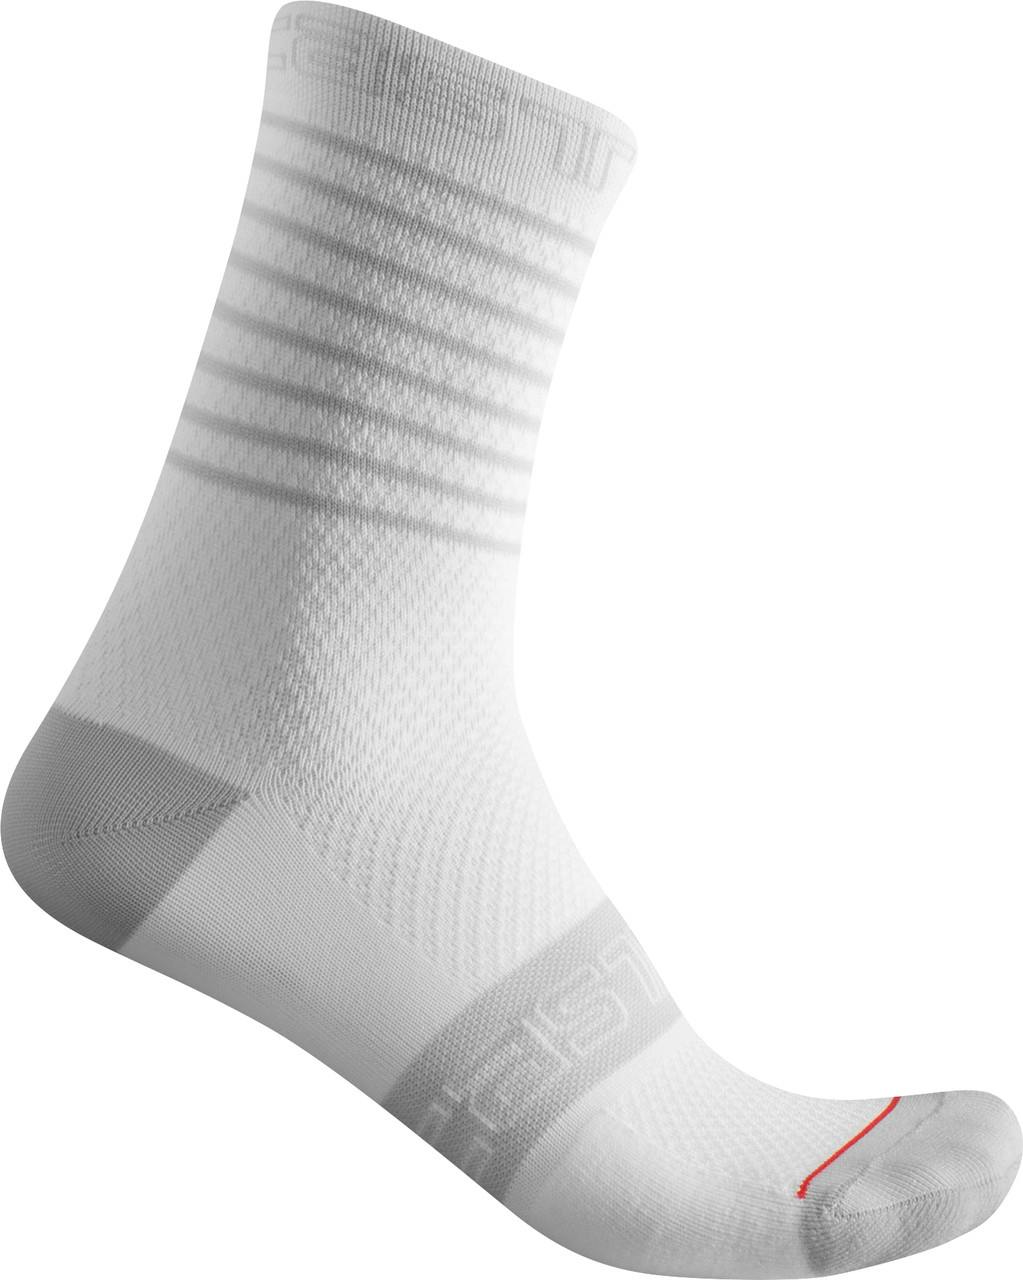 Superleggera 12 Inch Socks White